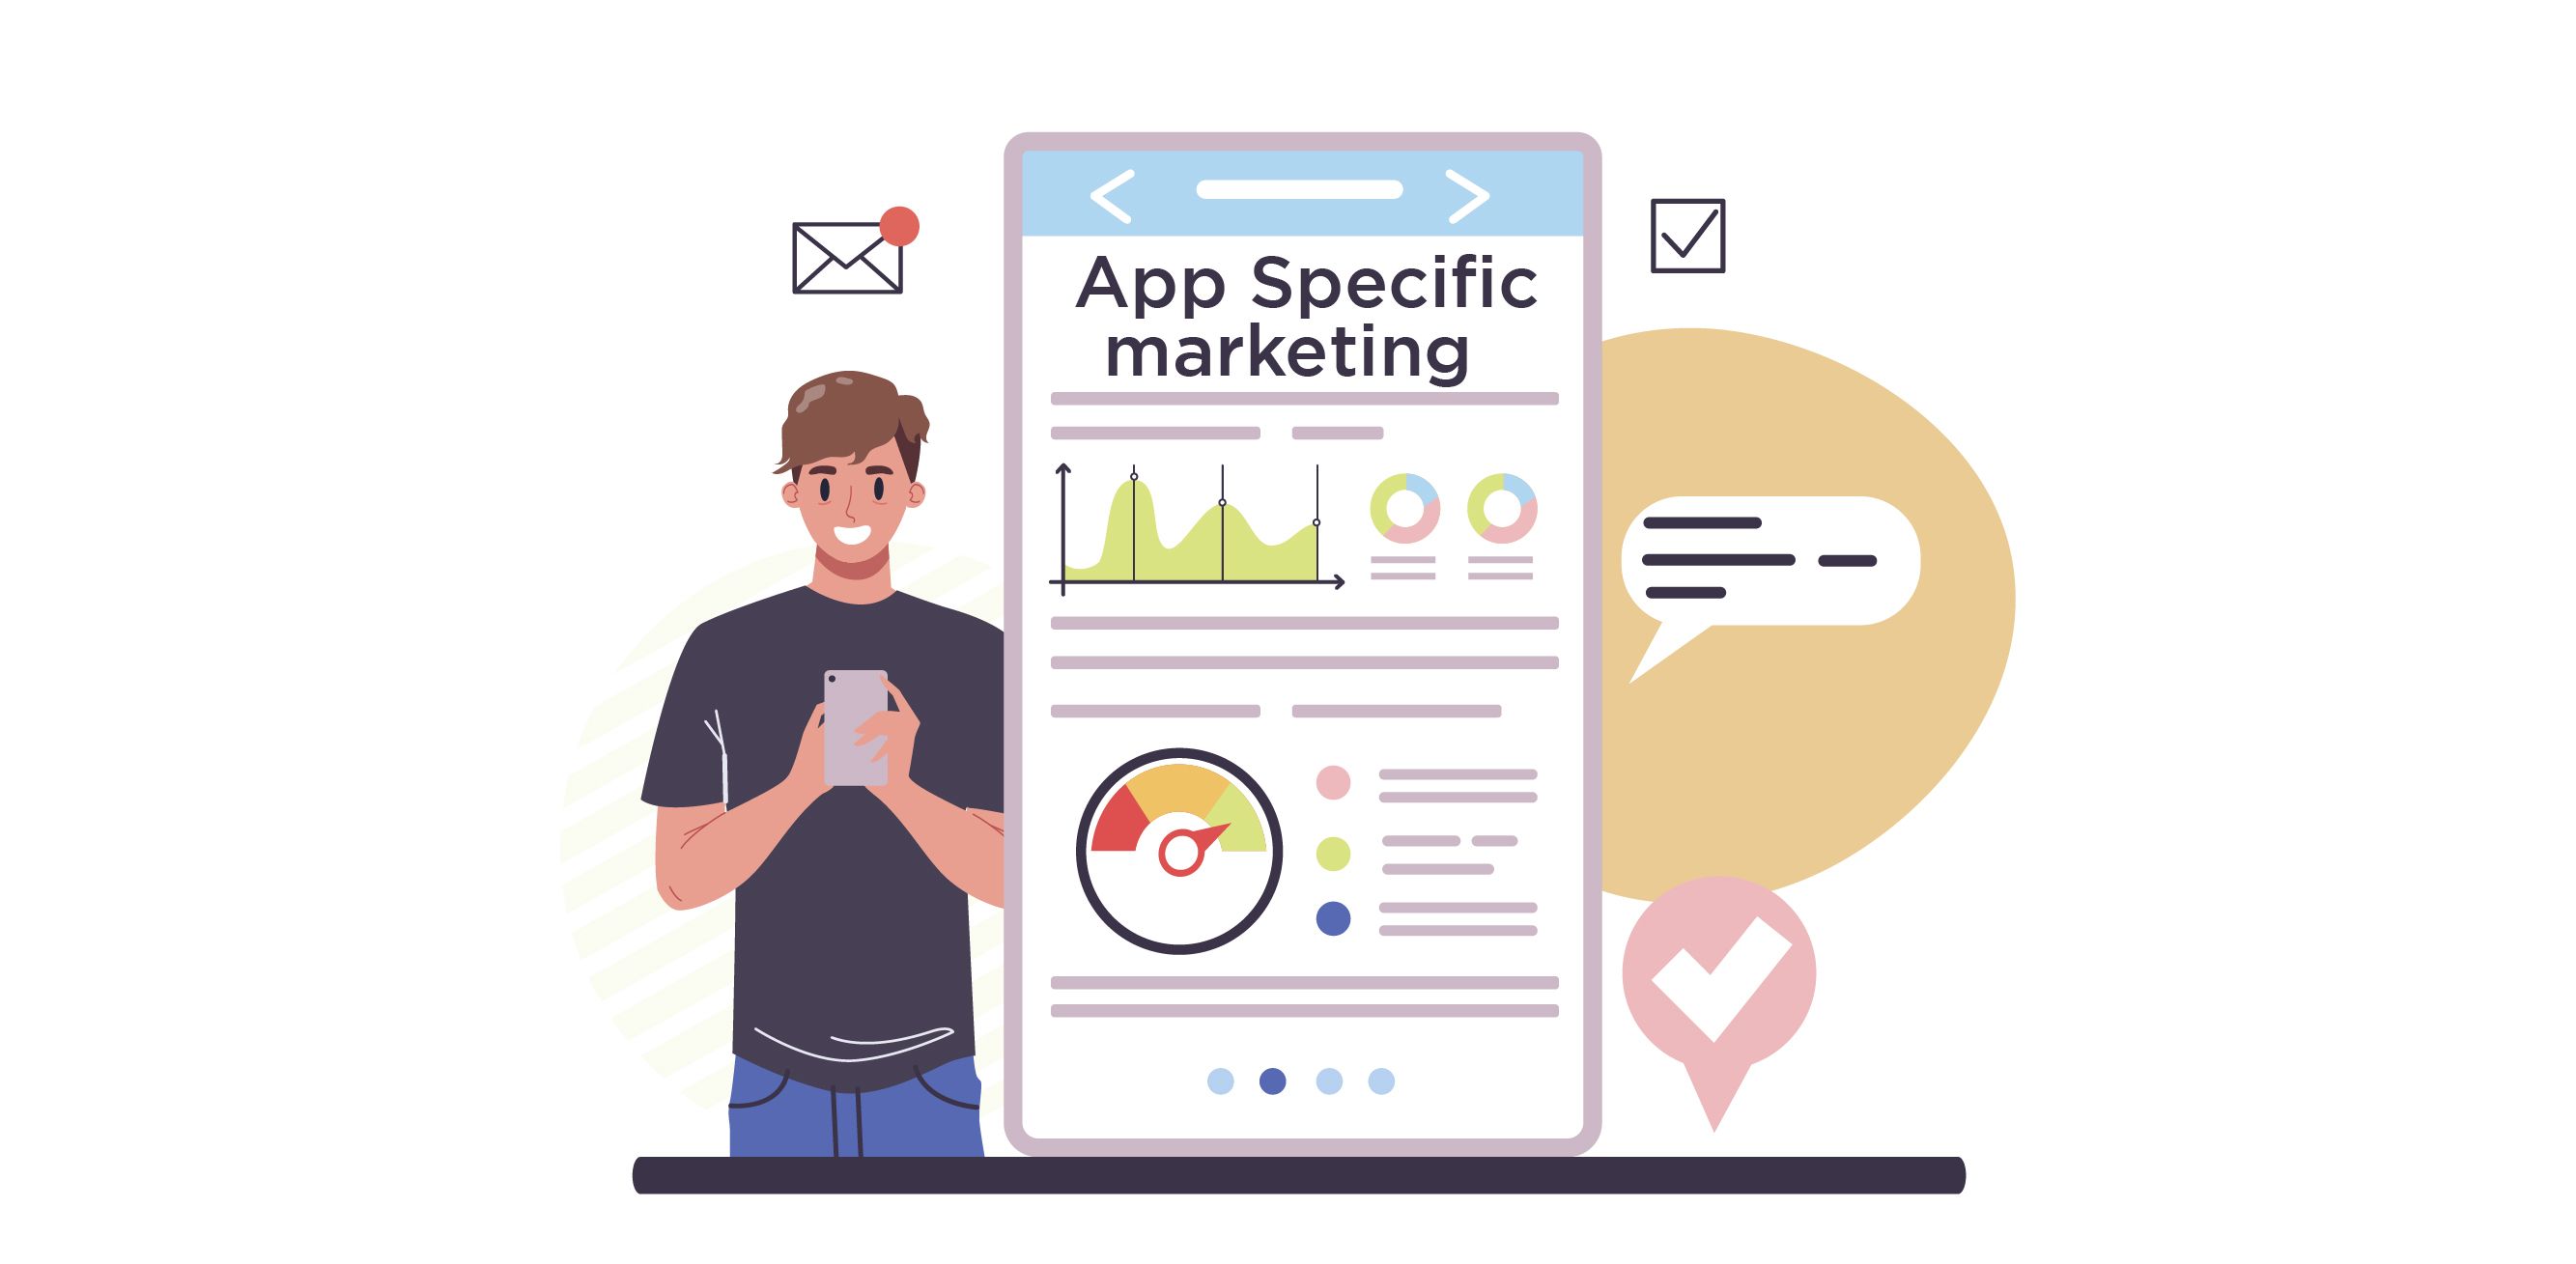 App-specific marketing